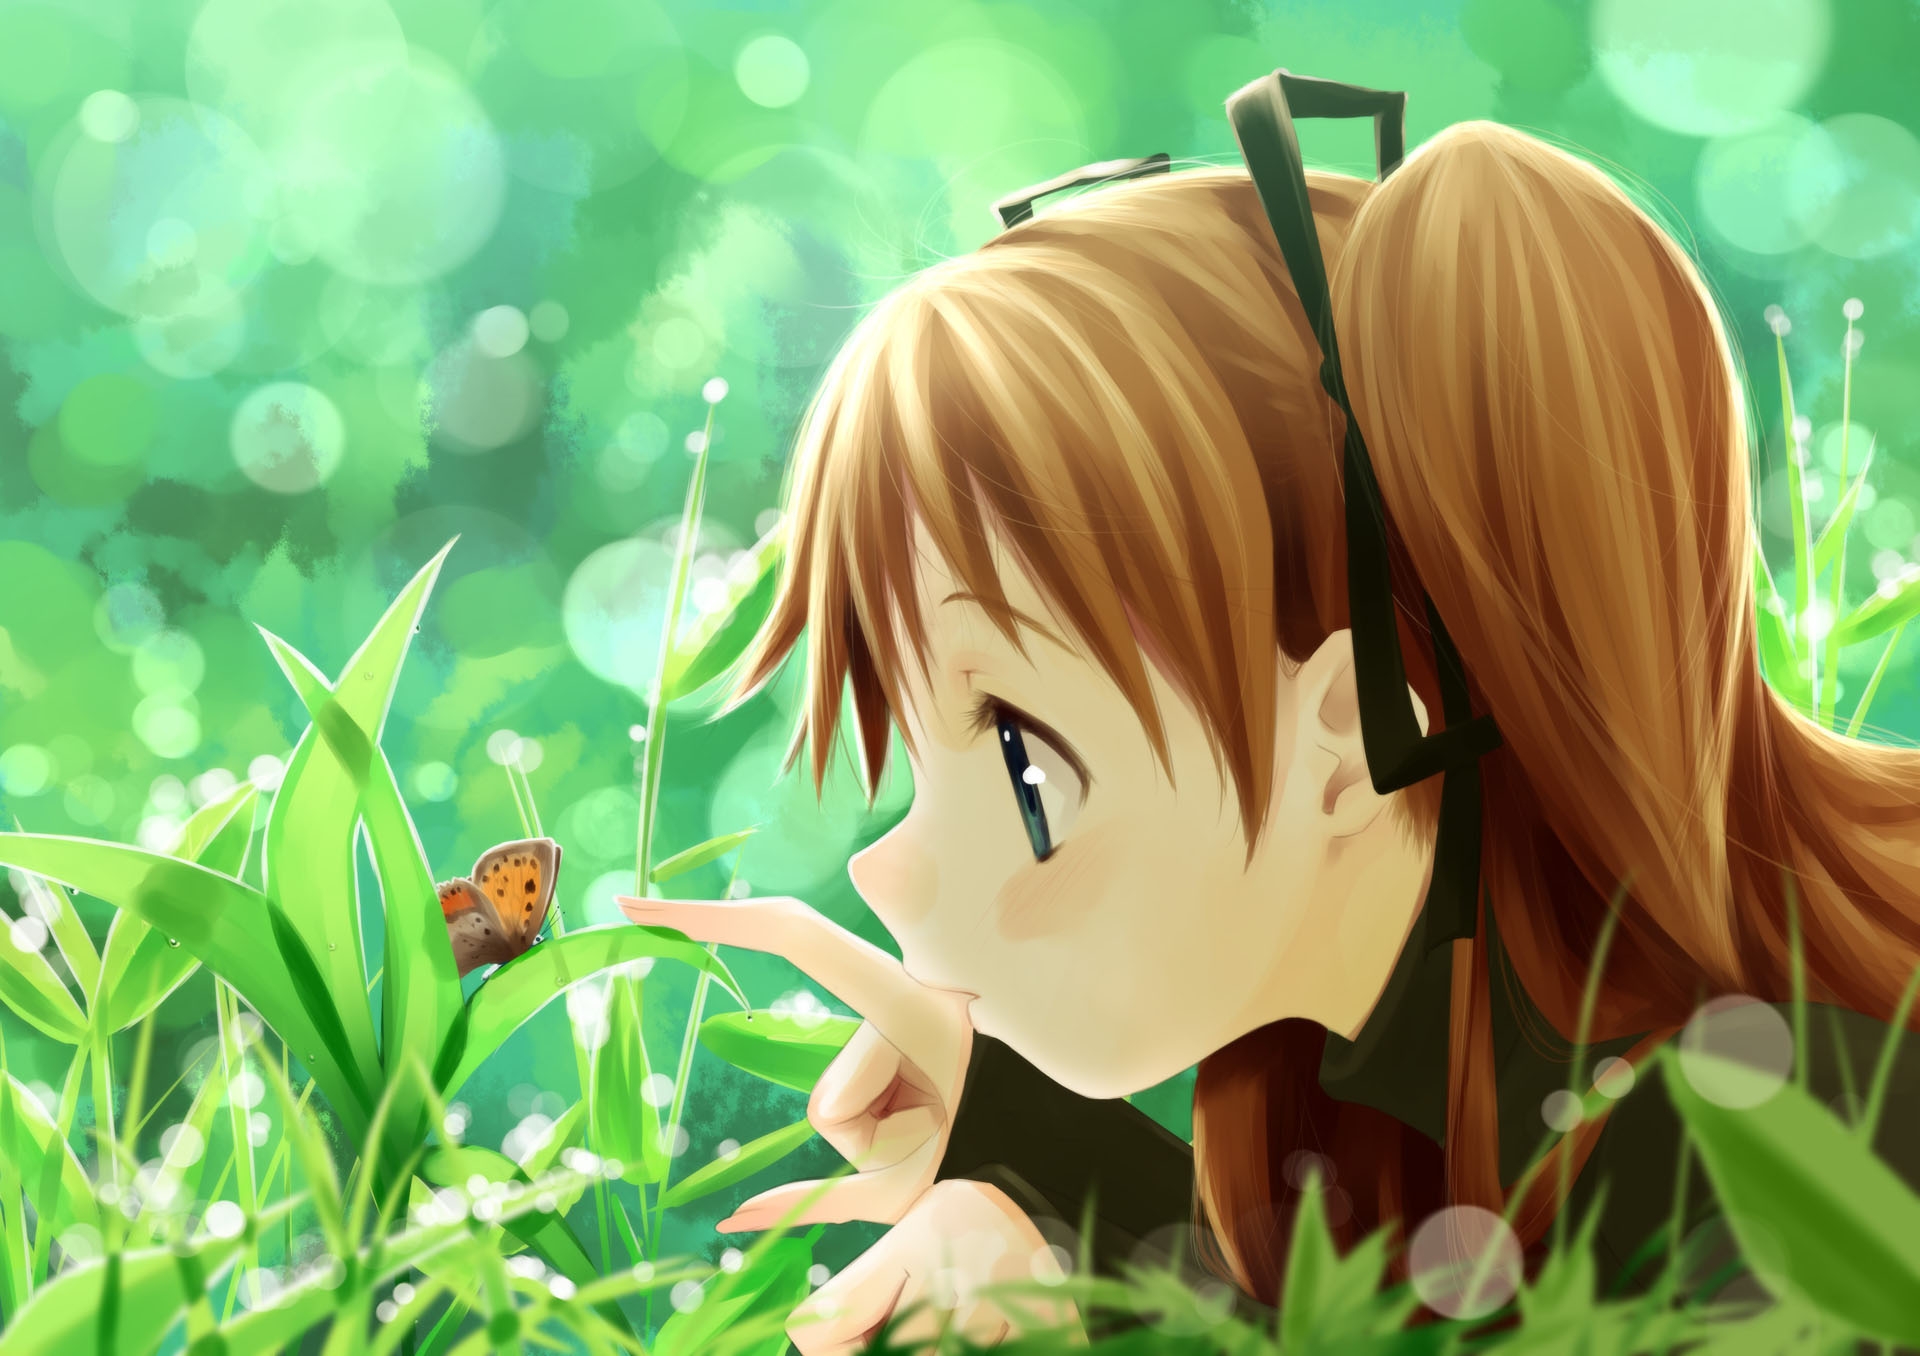 Descarga gratis la imagen Naturaleza, Planta, Mariposa, Niña, Muchacha, Anime en el escritorio de tu PC